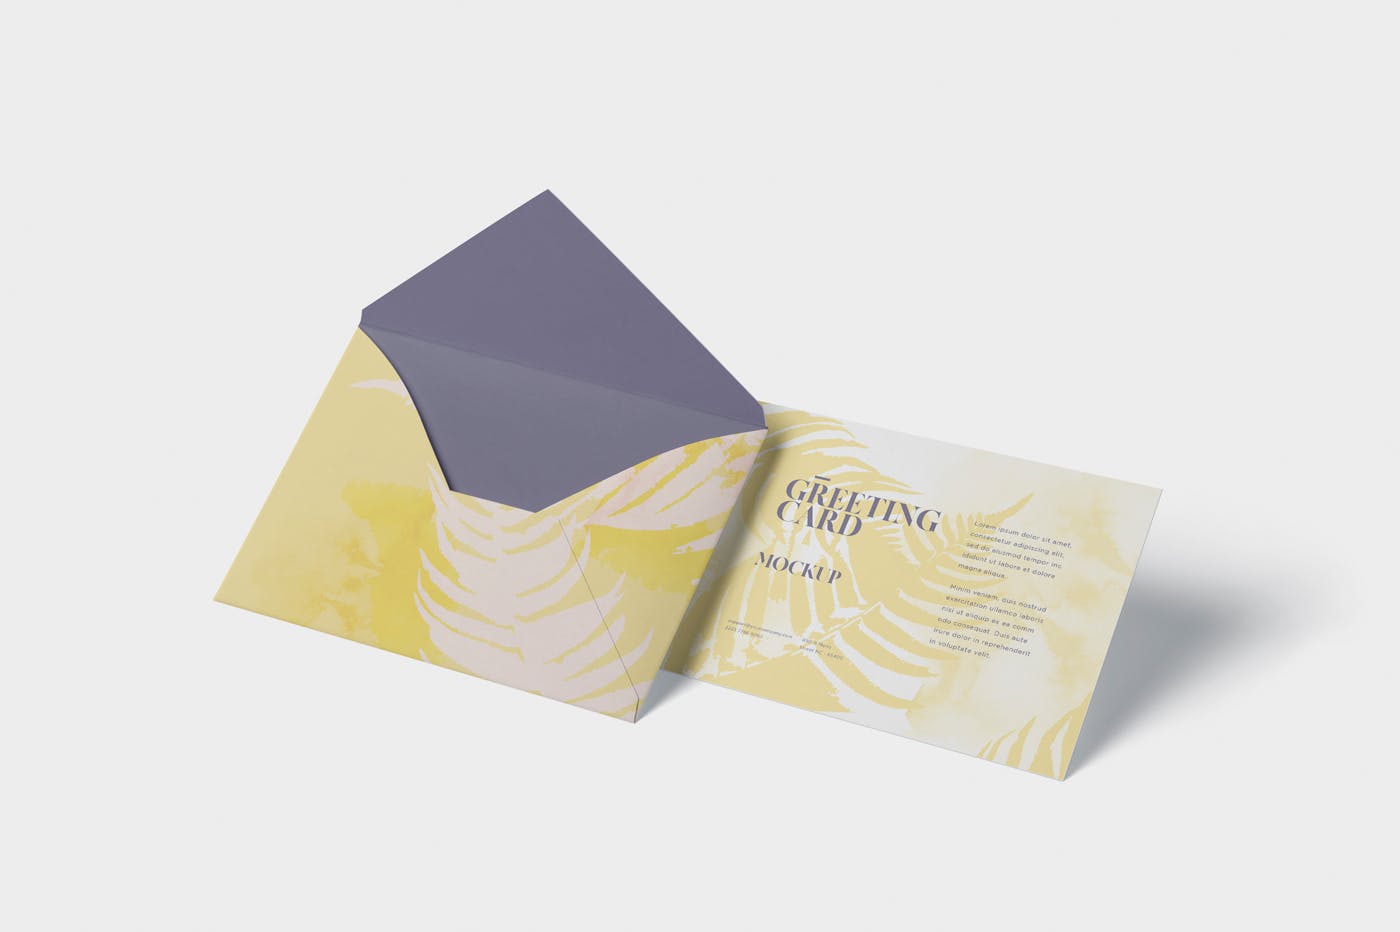 高端企业信封&贺卡设计图蚂蚁素材精选 Greeting Card Mockup with Envelope – A6 Size插图(2)